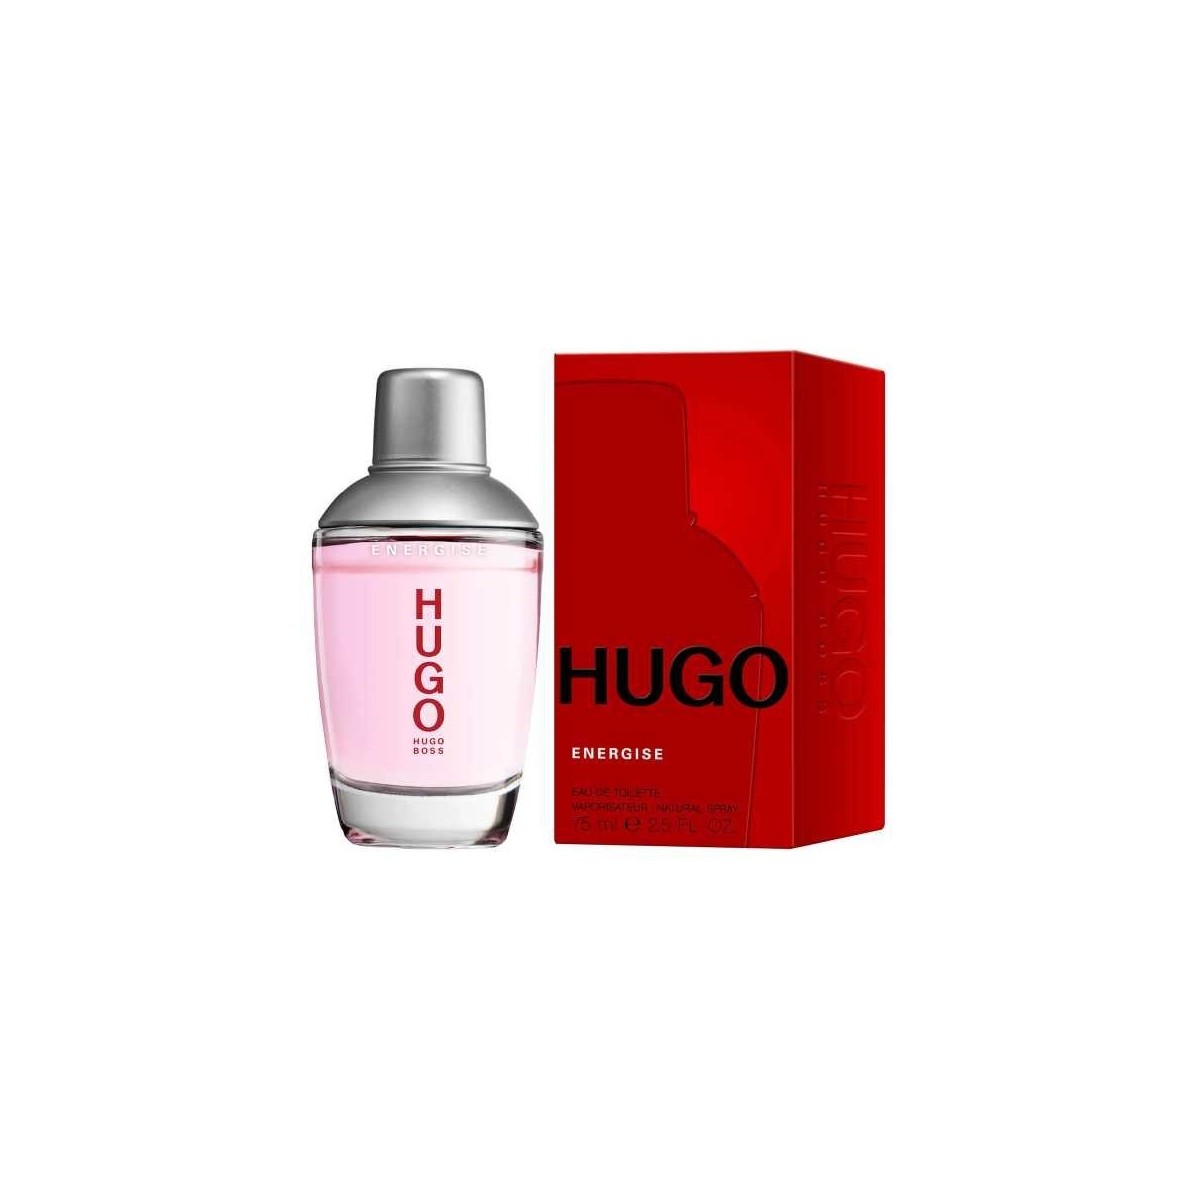 Hugo Boss Energise Eau de Toilette 75ml spray